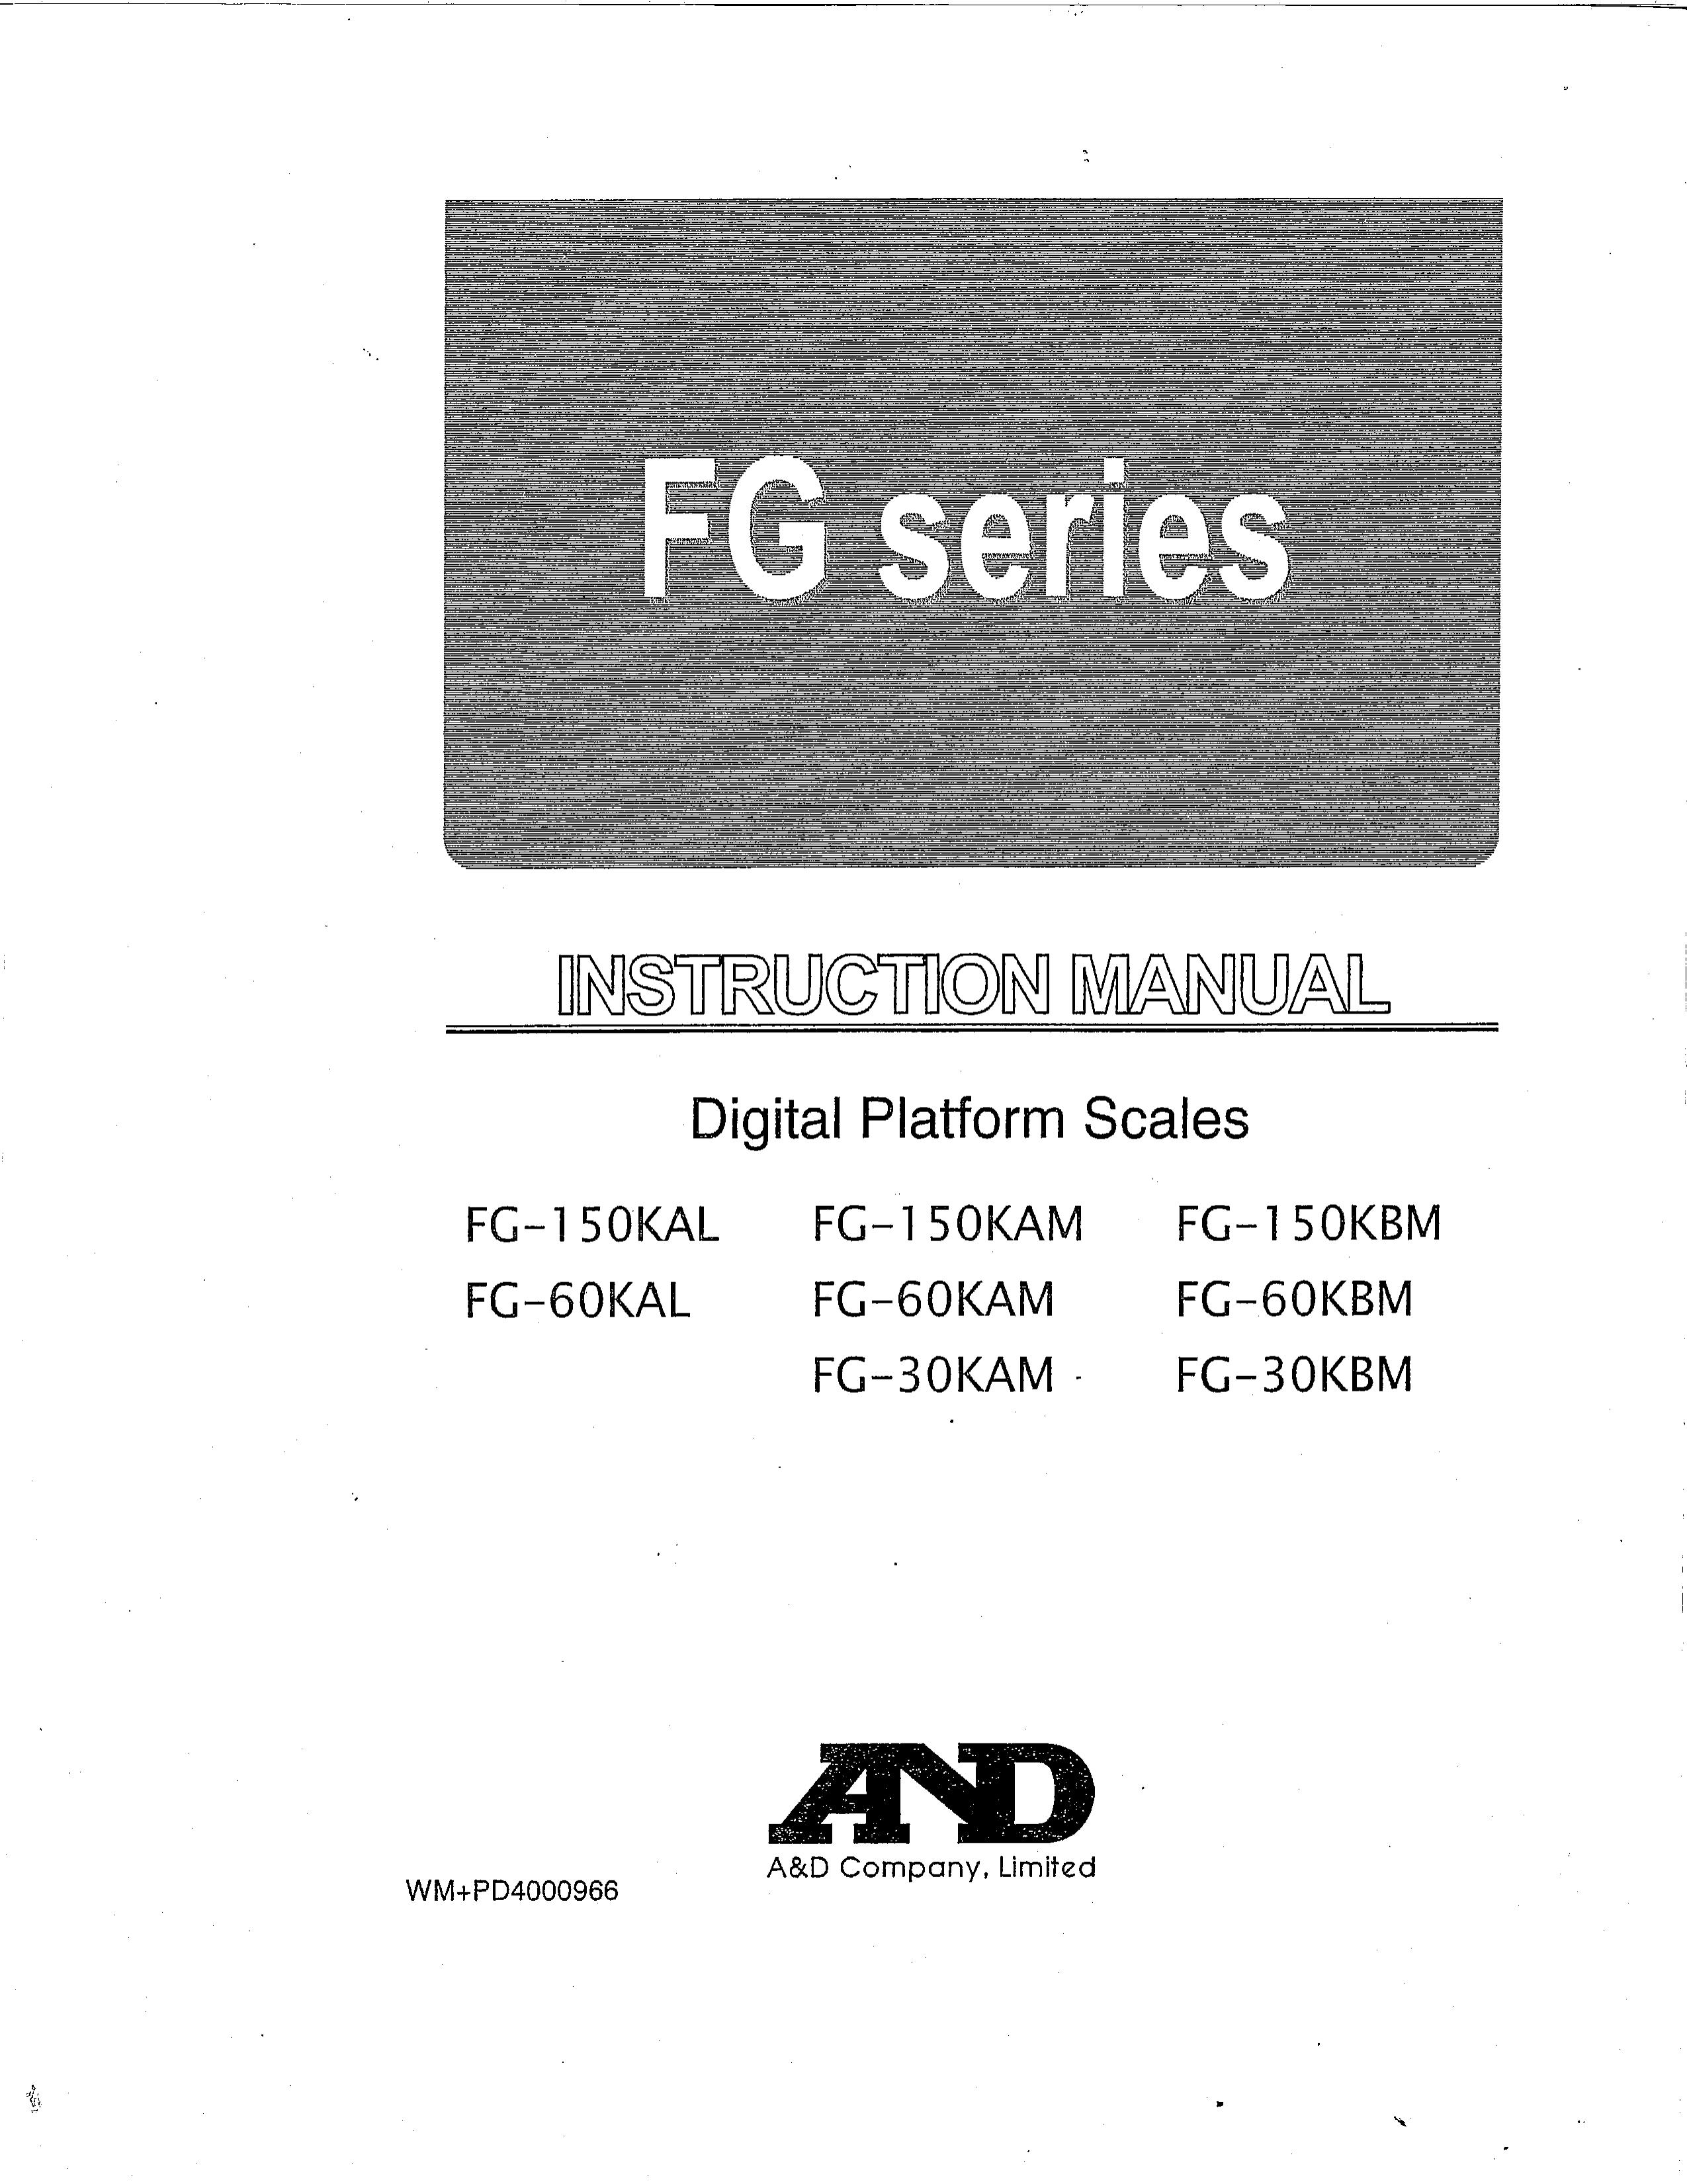 A&D FG-60KBM Scale User Manual